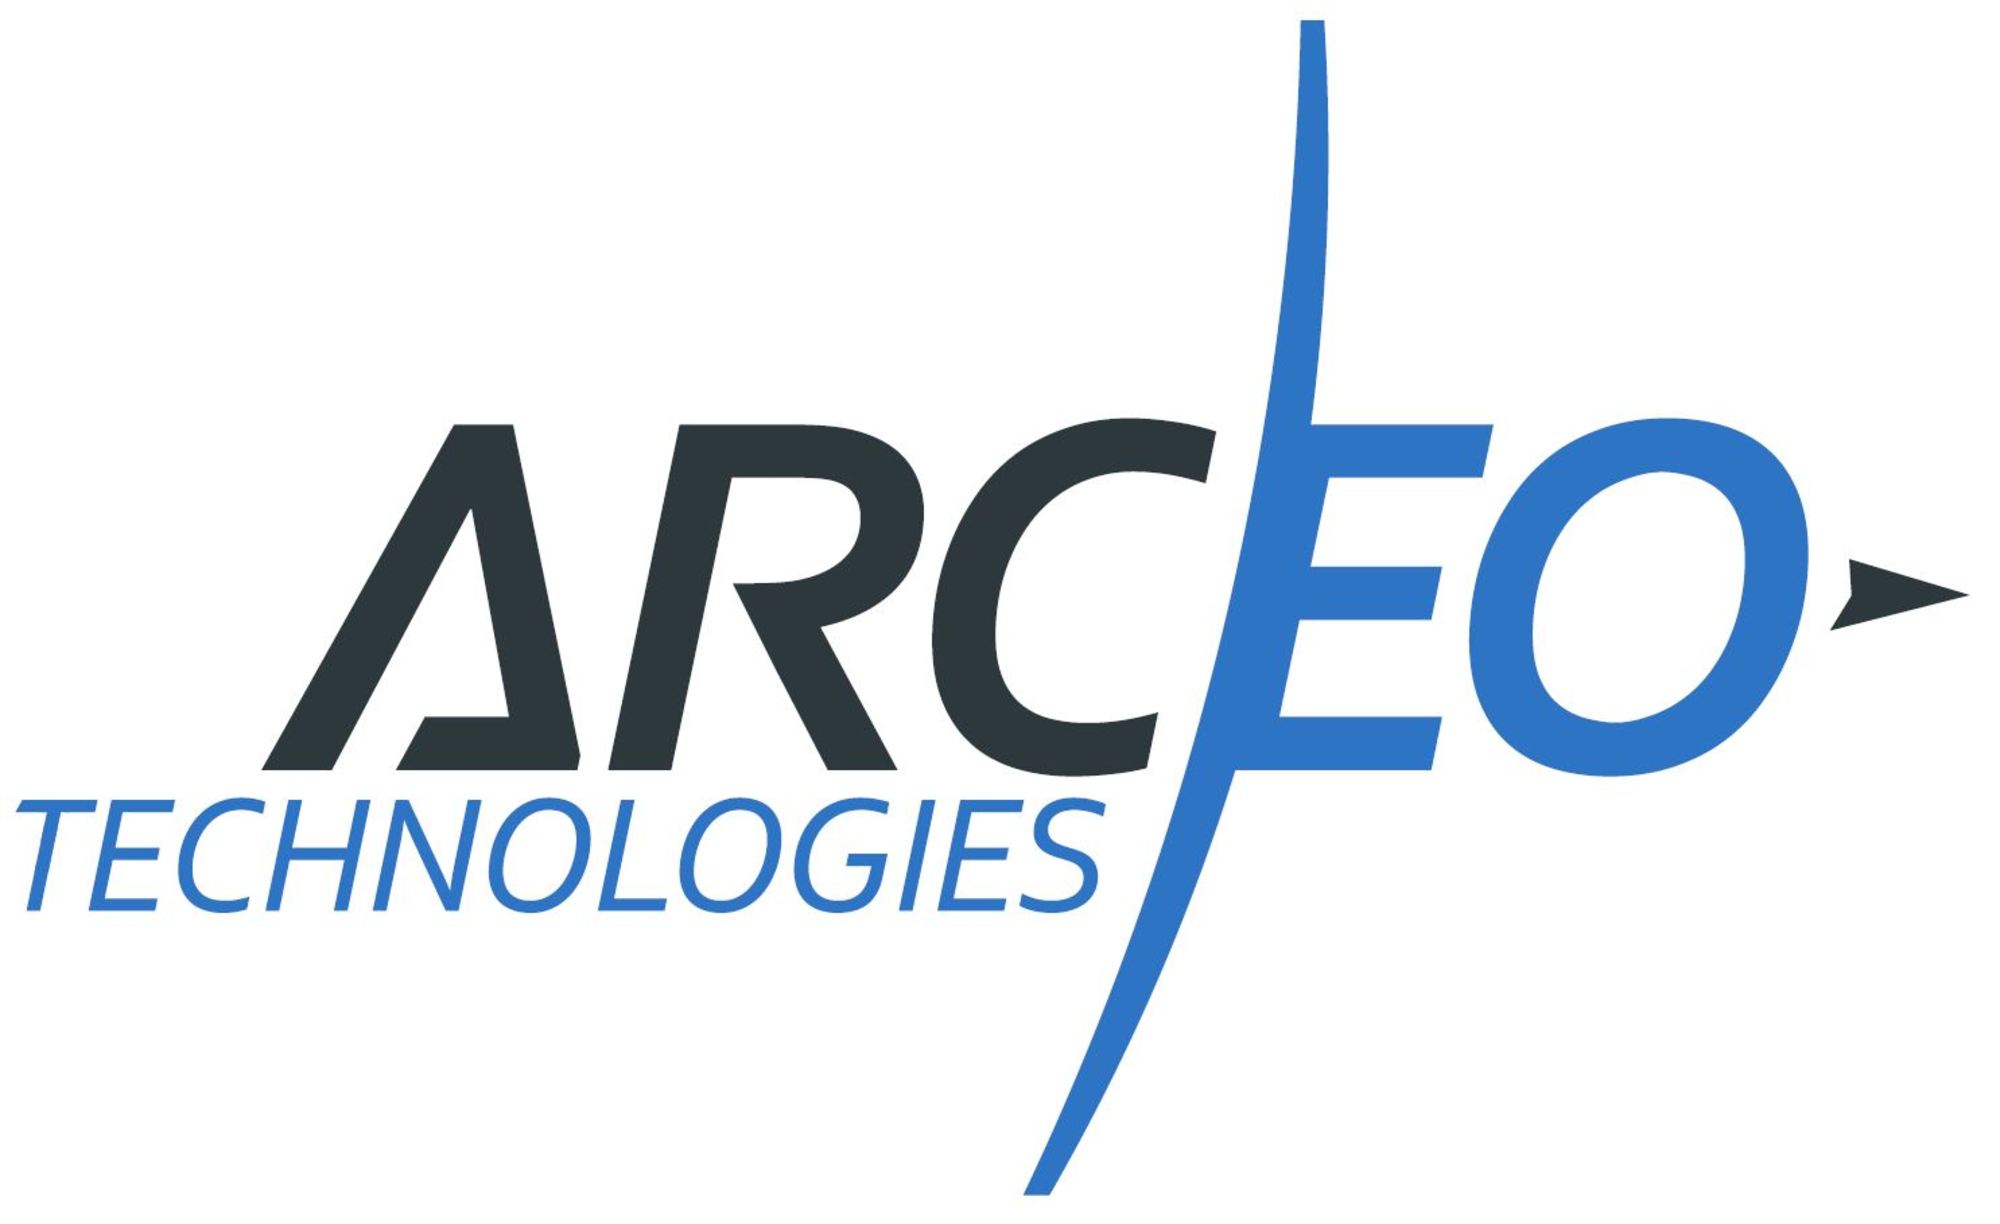 Arceo Technologies